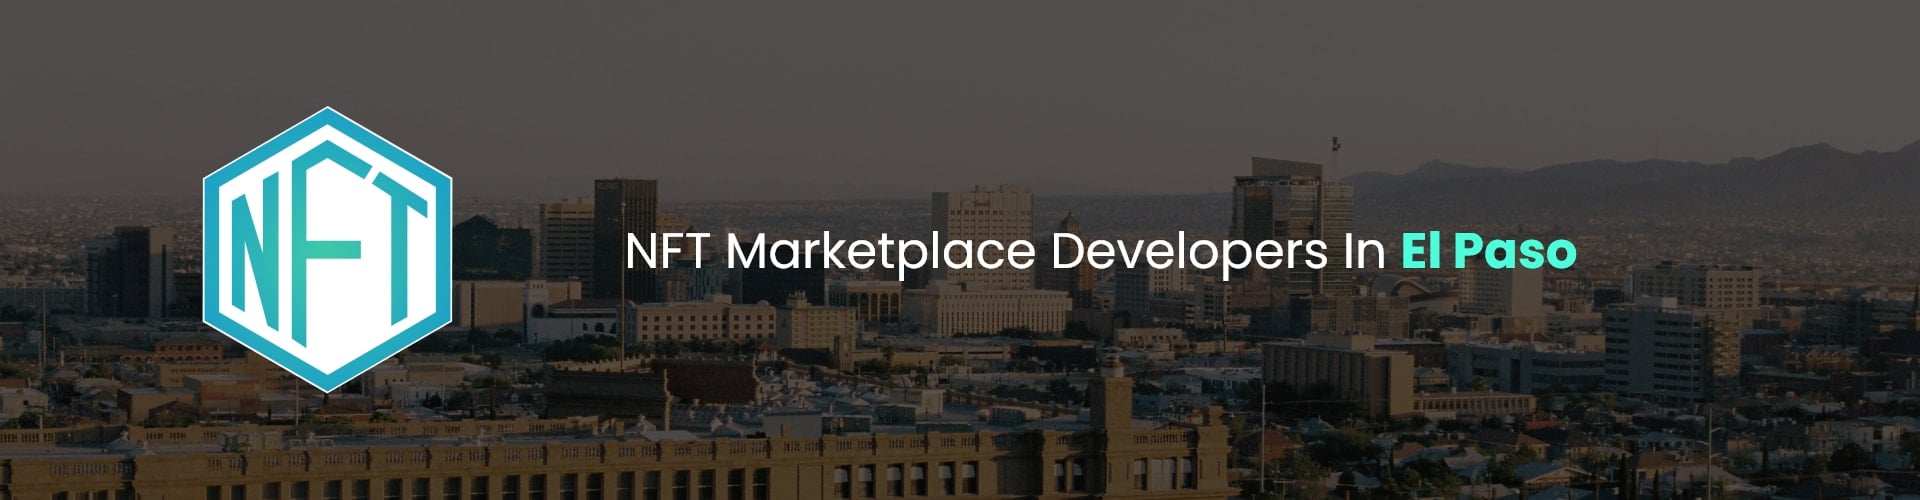 hire nft marketplace developers in el paso